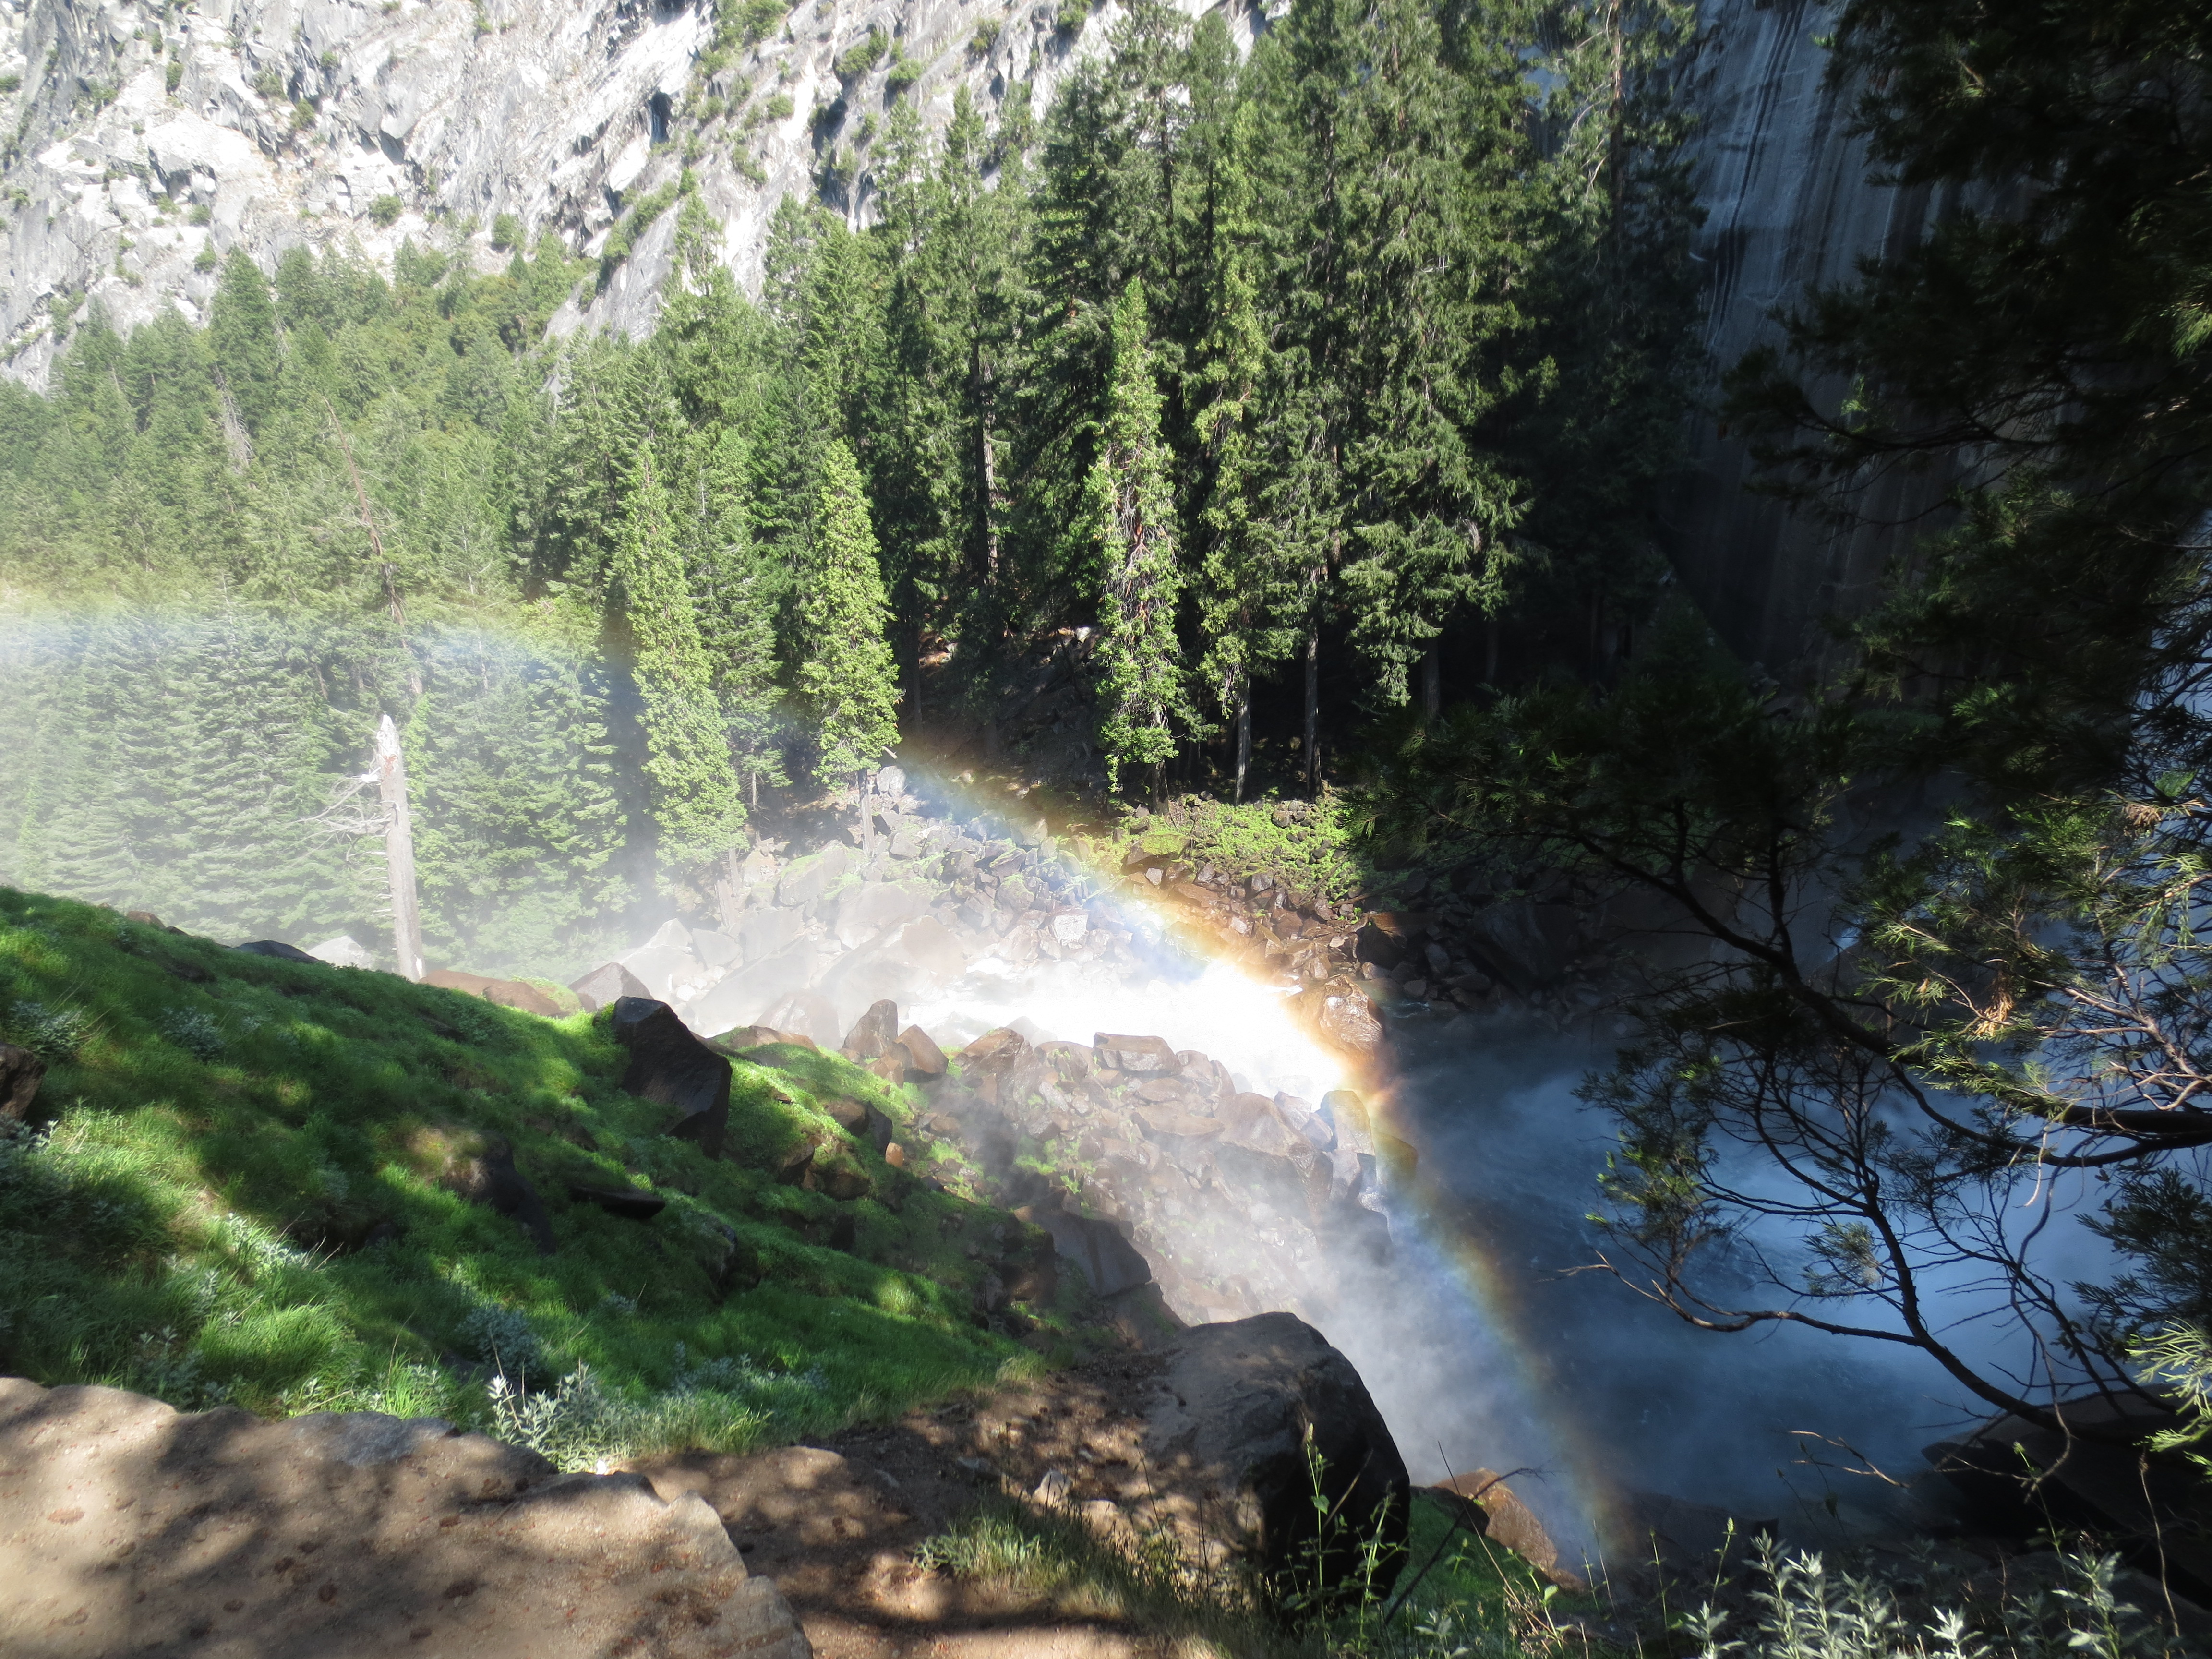 Vernal Fall, Yosemite